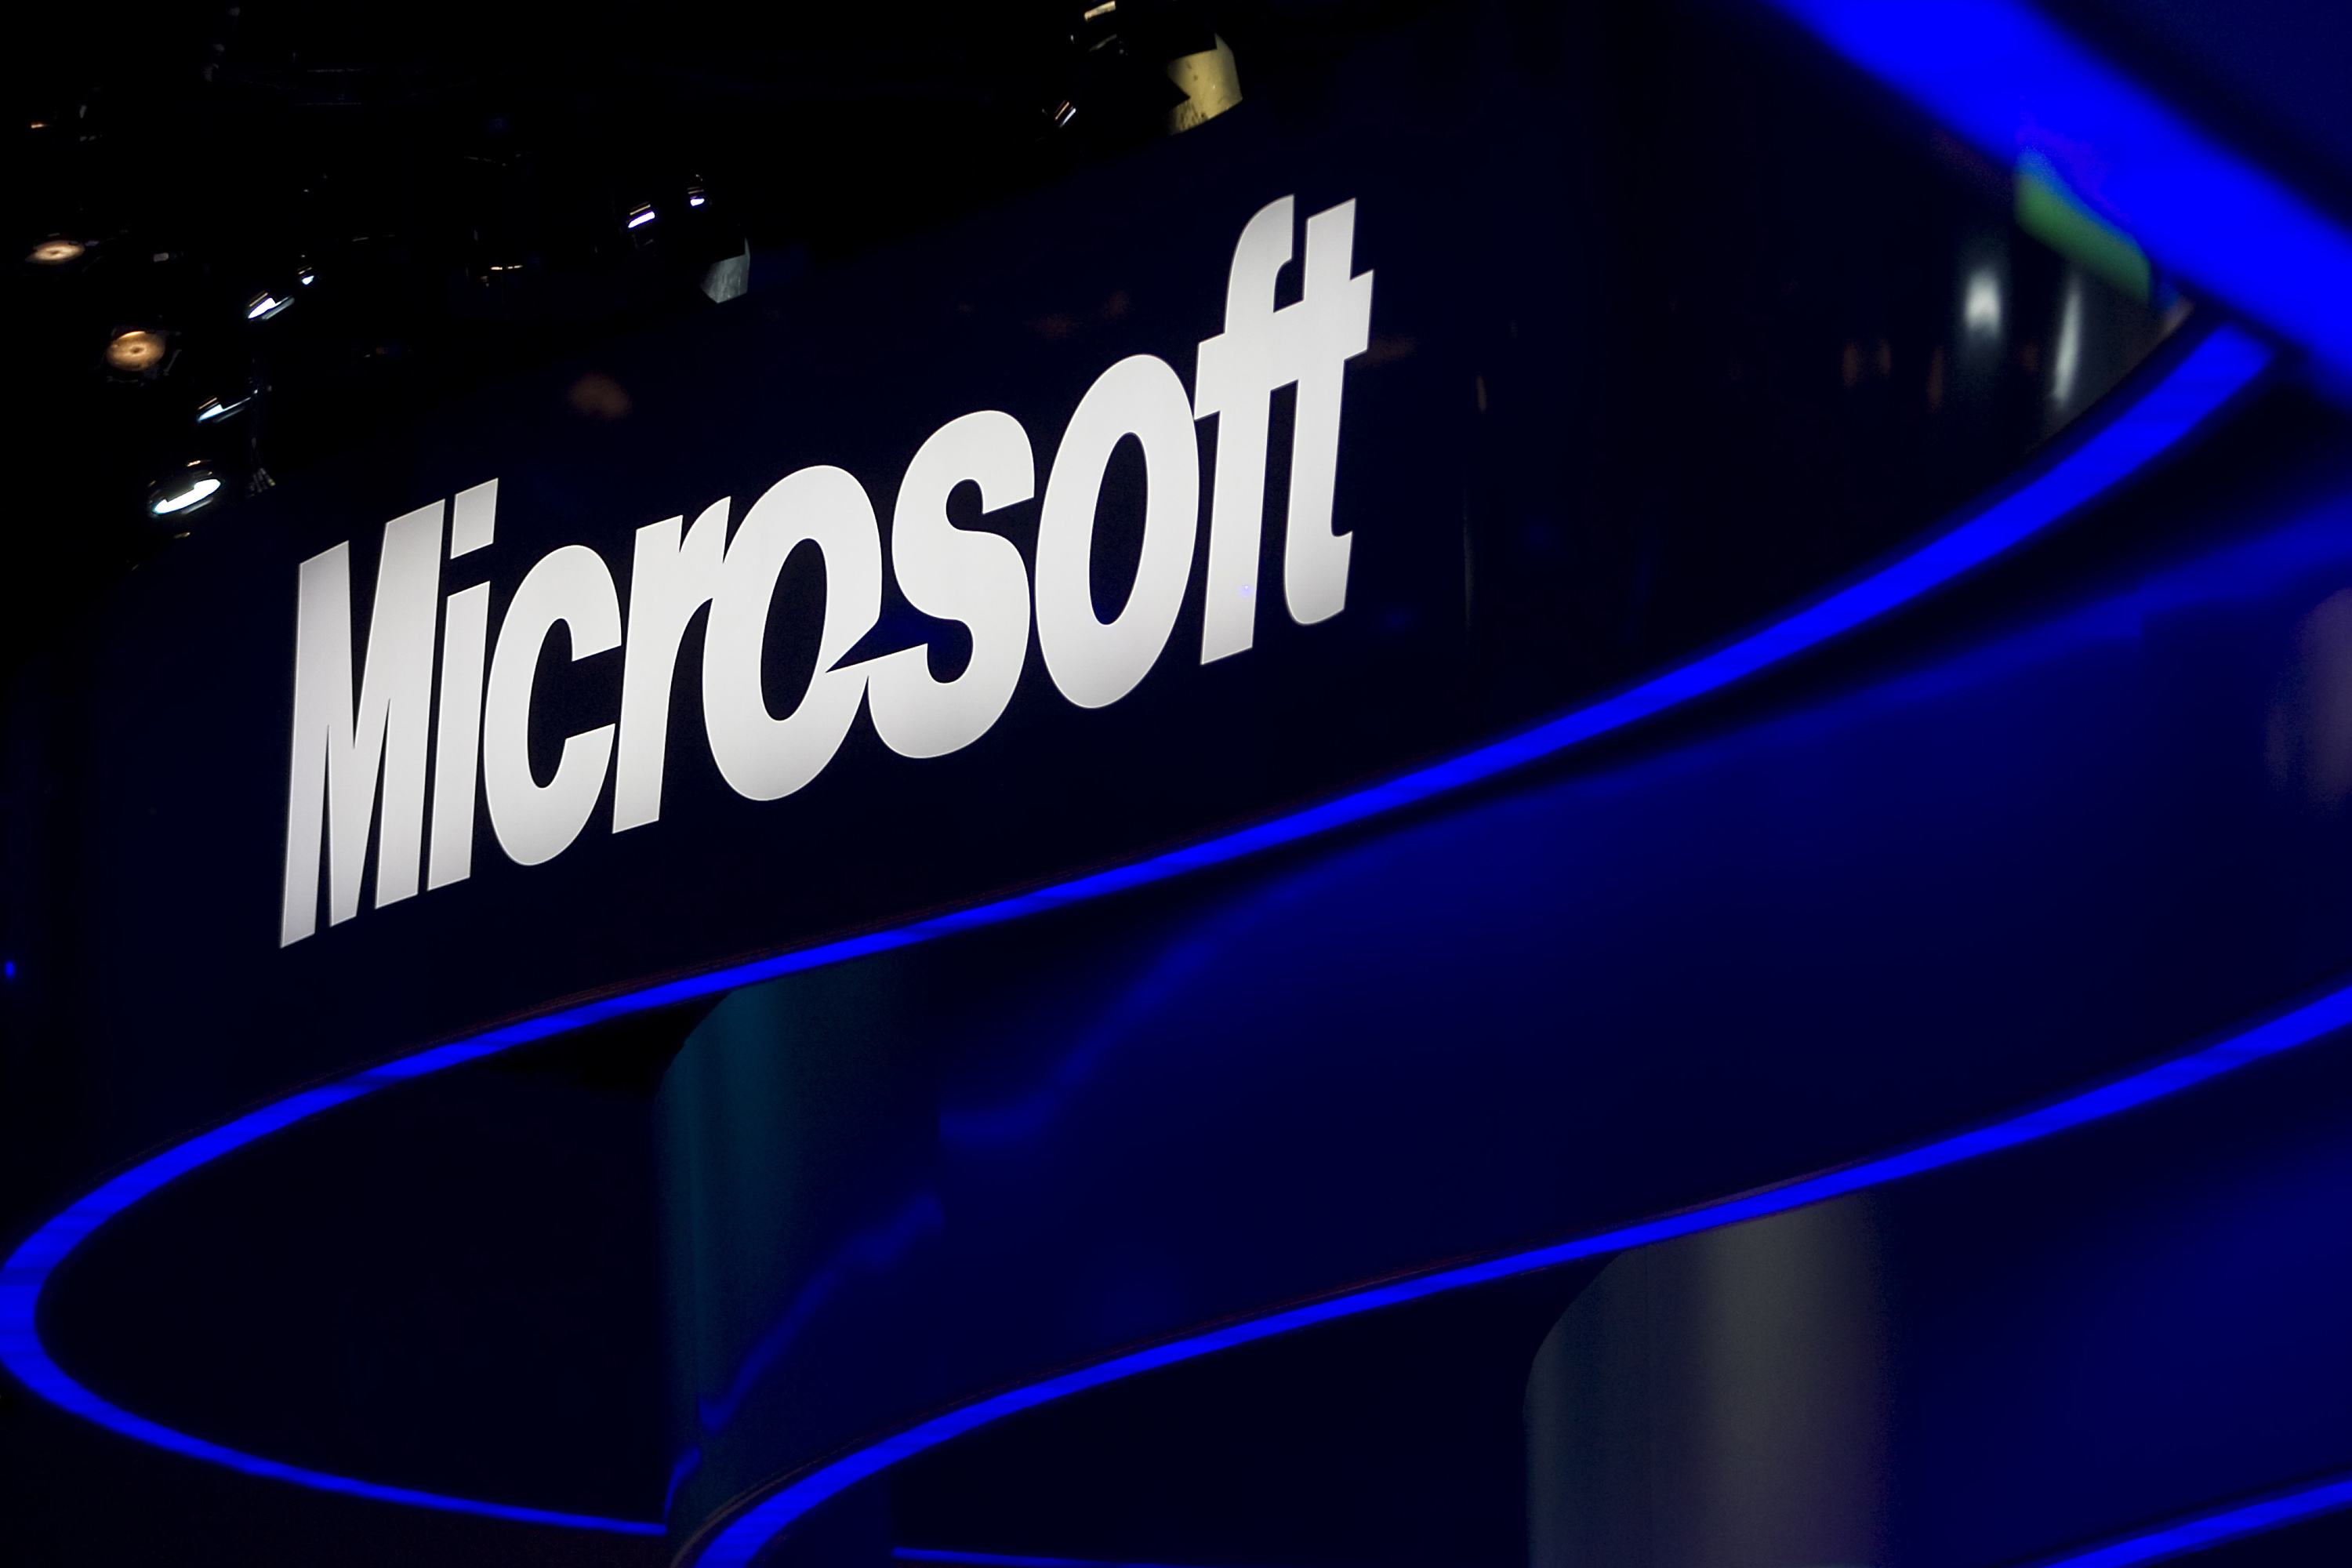 Microsoft raises dividend, plans $40 billion share buyback